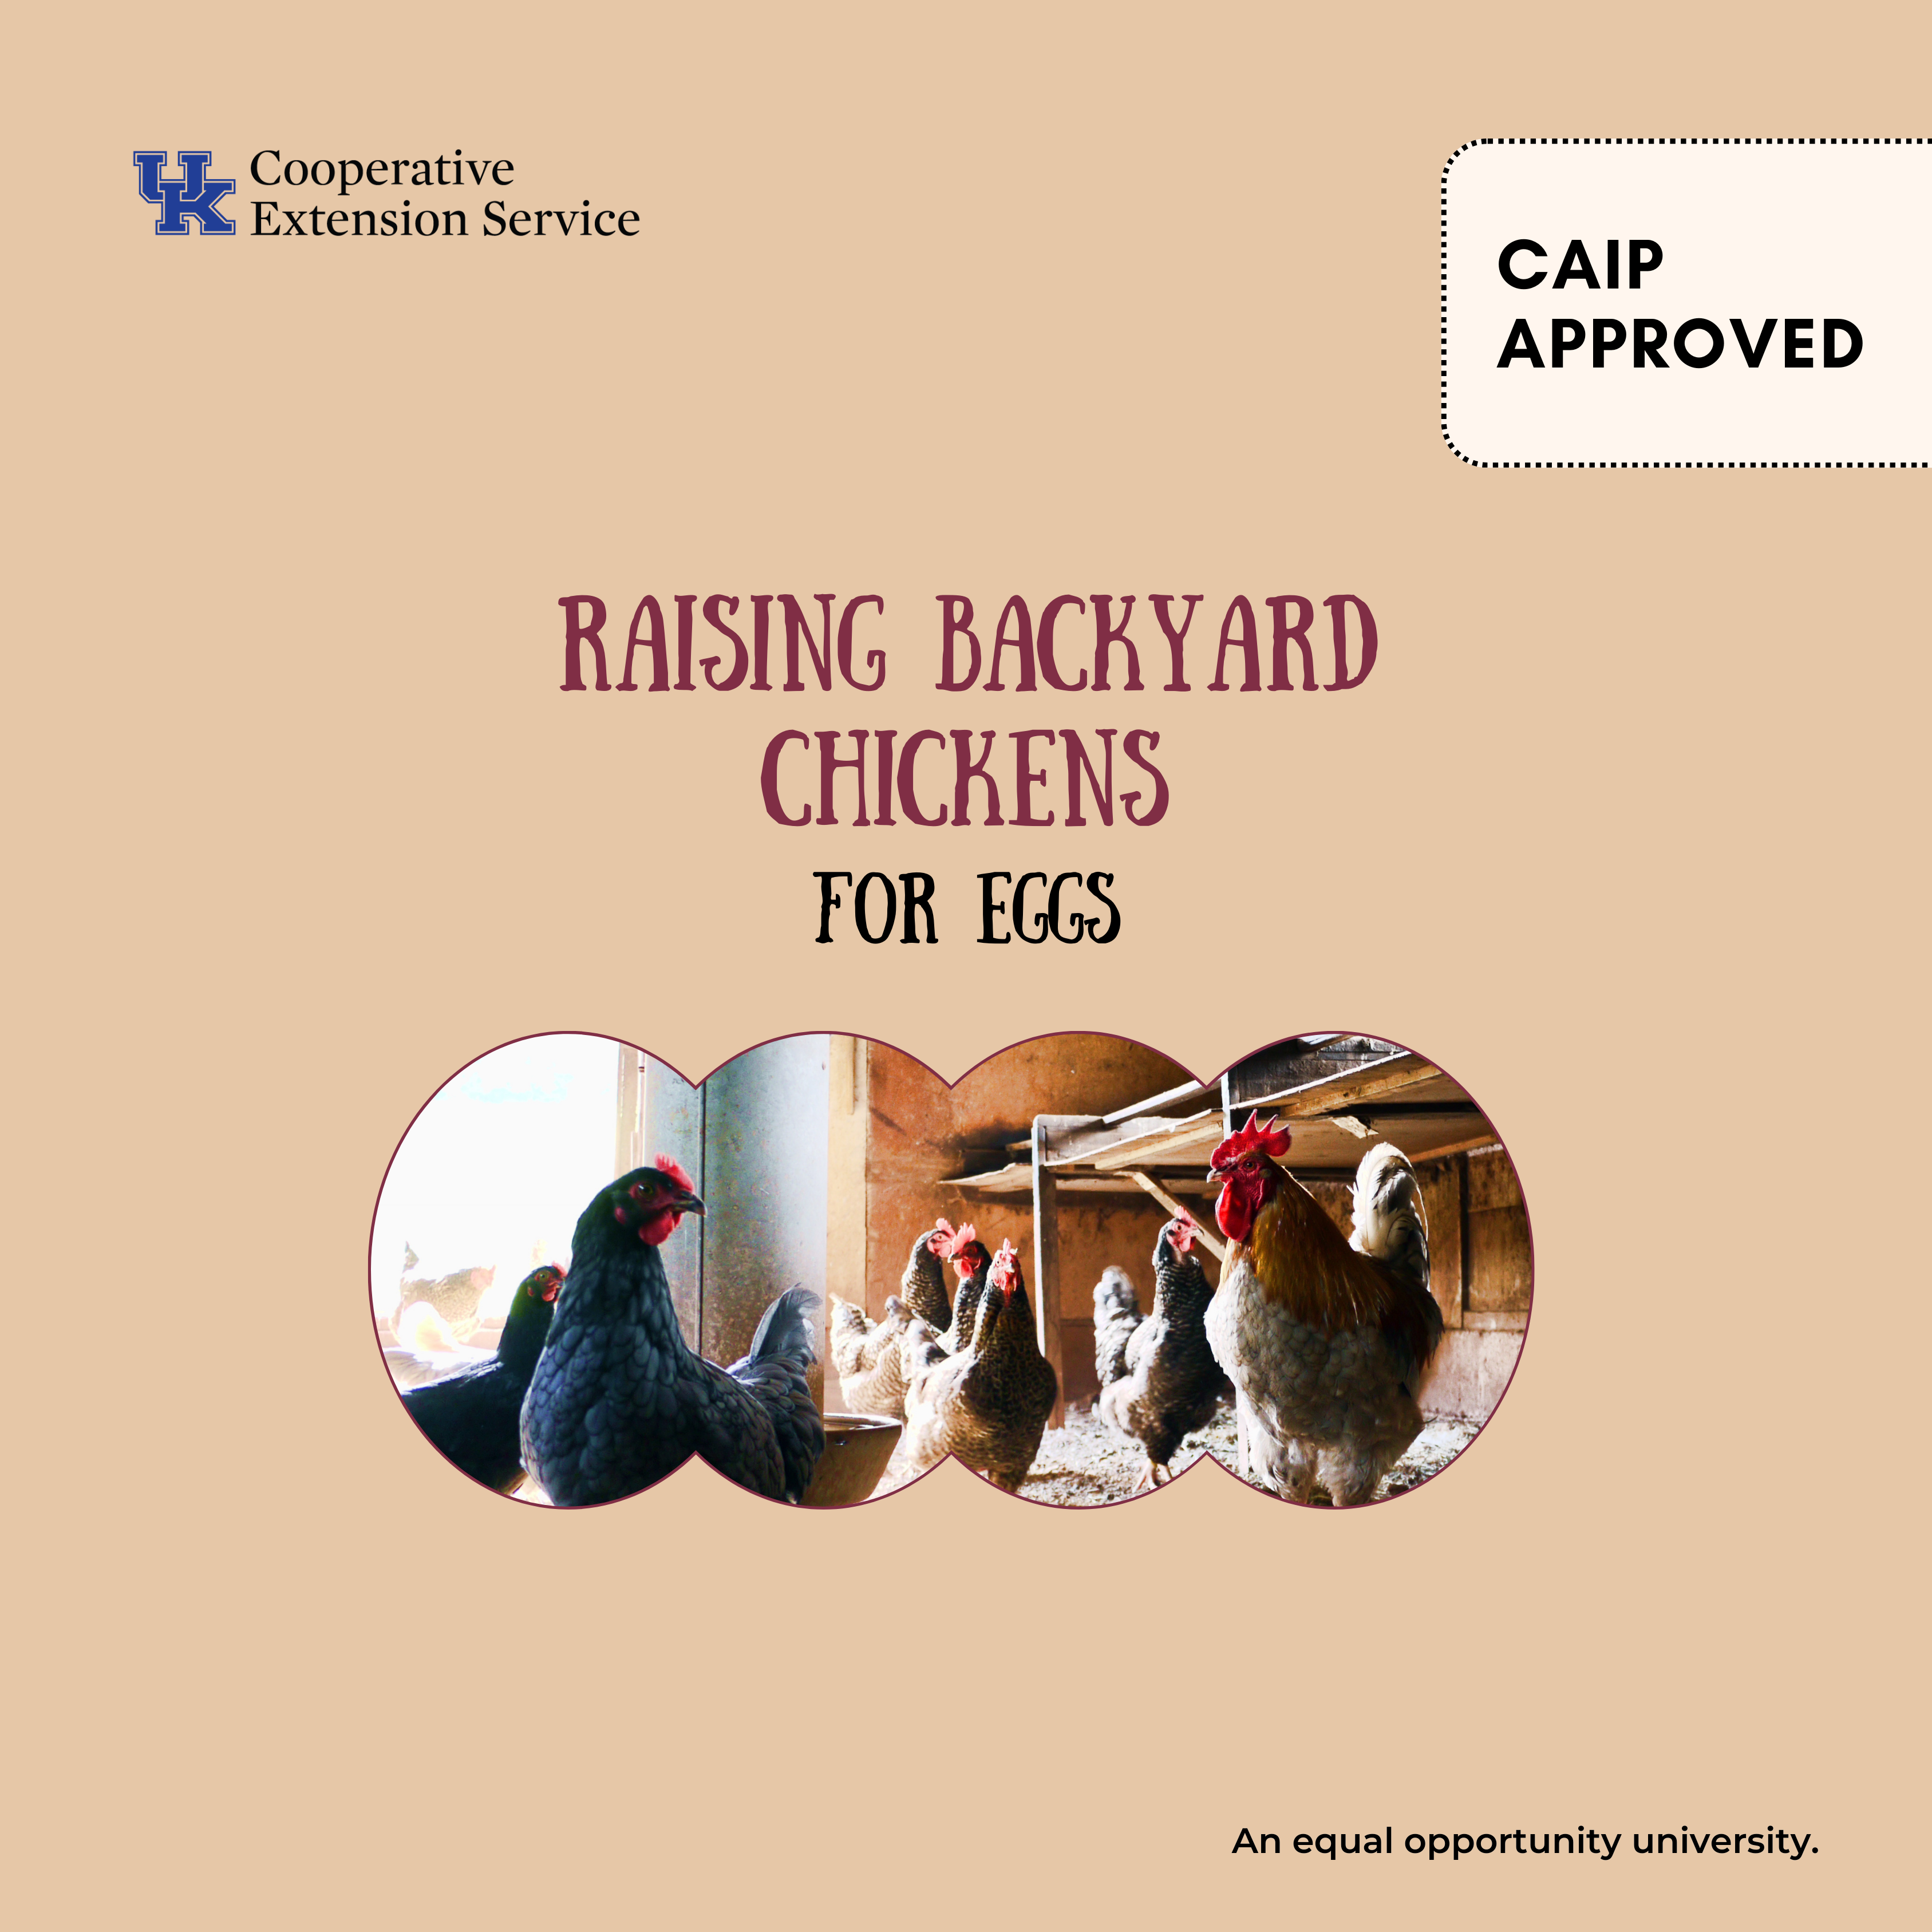 Raising Backyard Chickens program advertisement